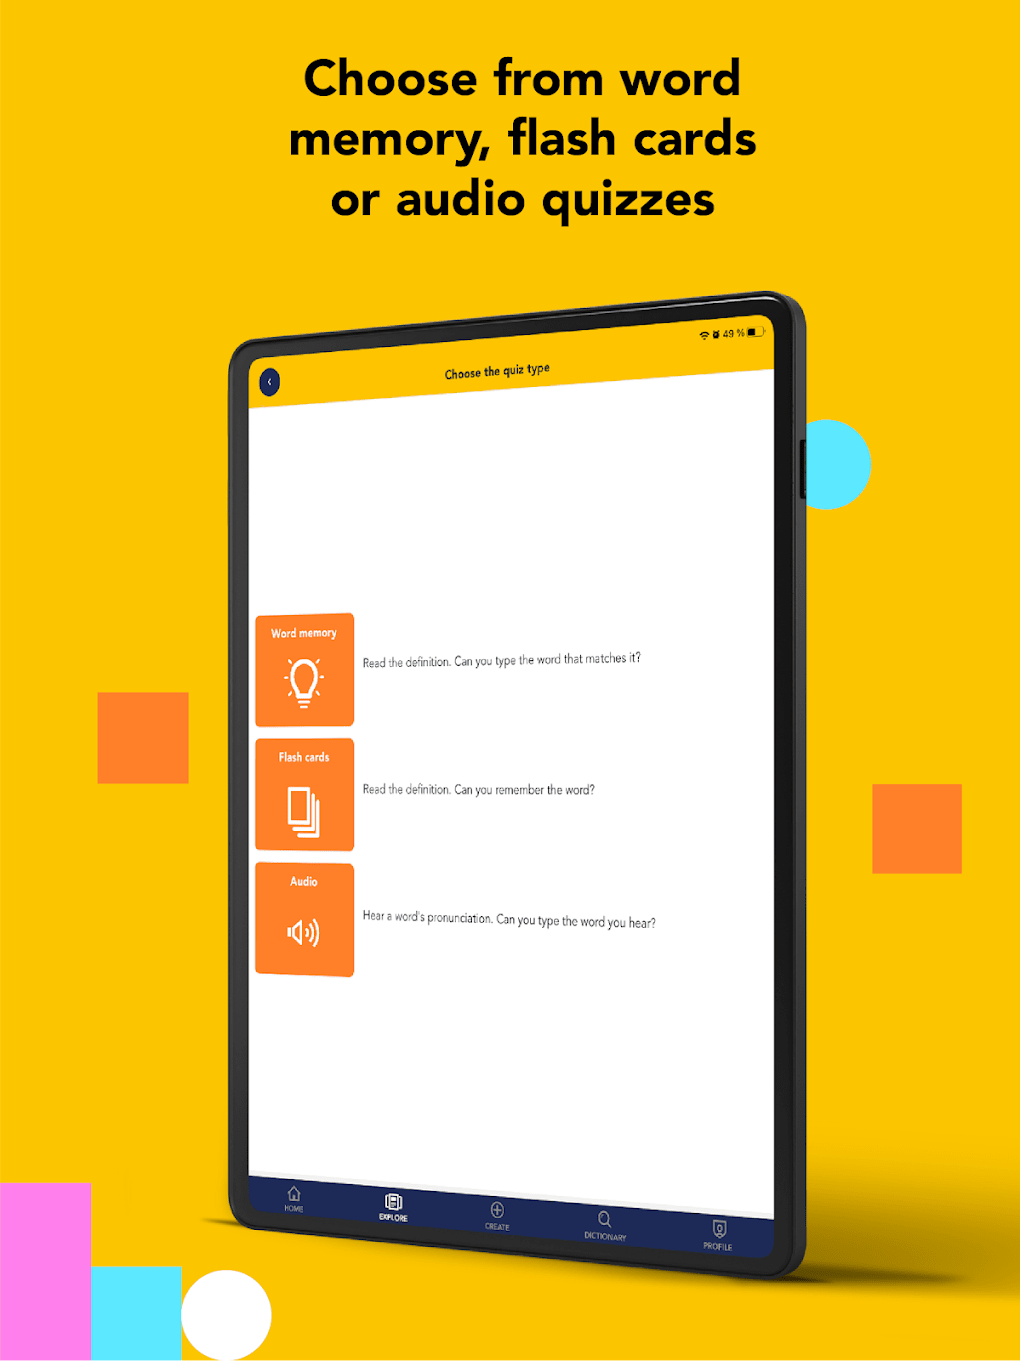 Quiz Monster Concursos APK for Android Download